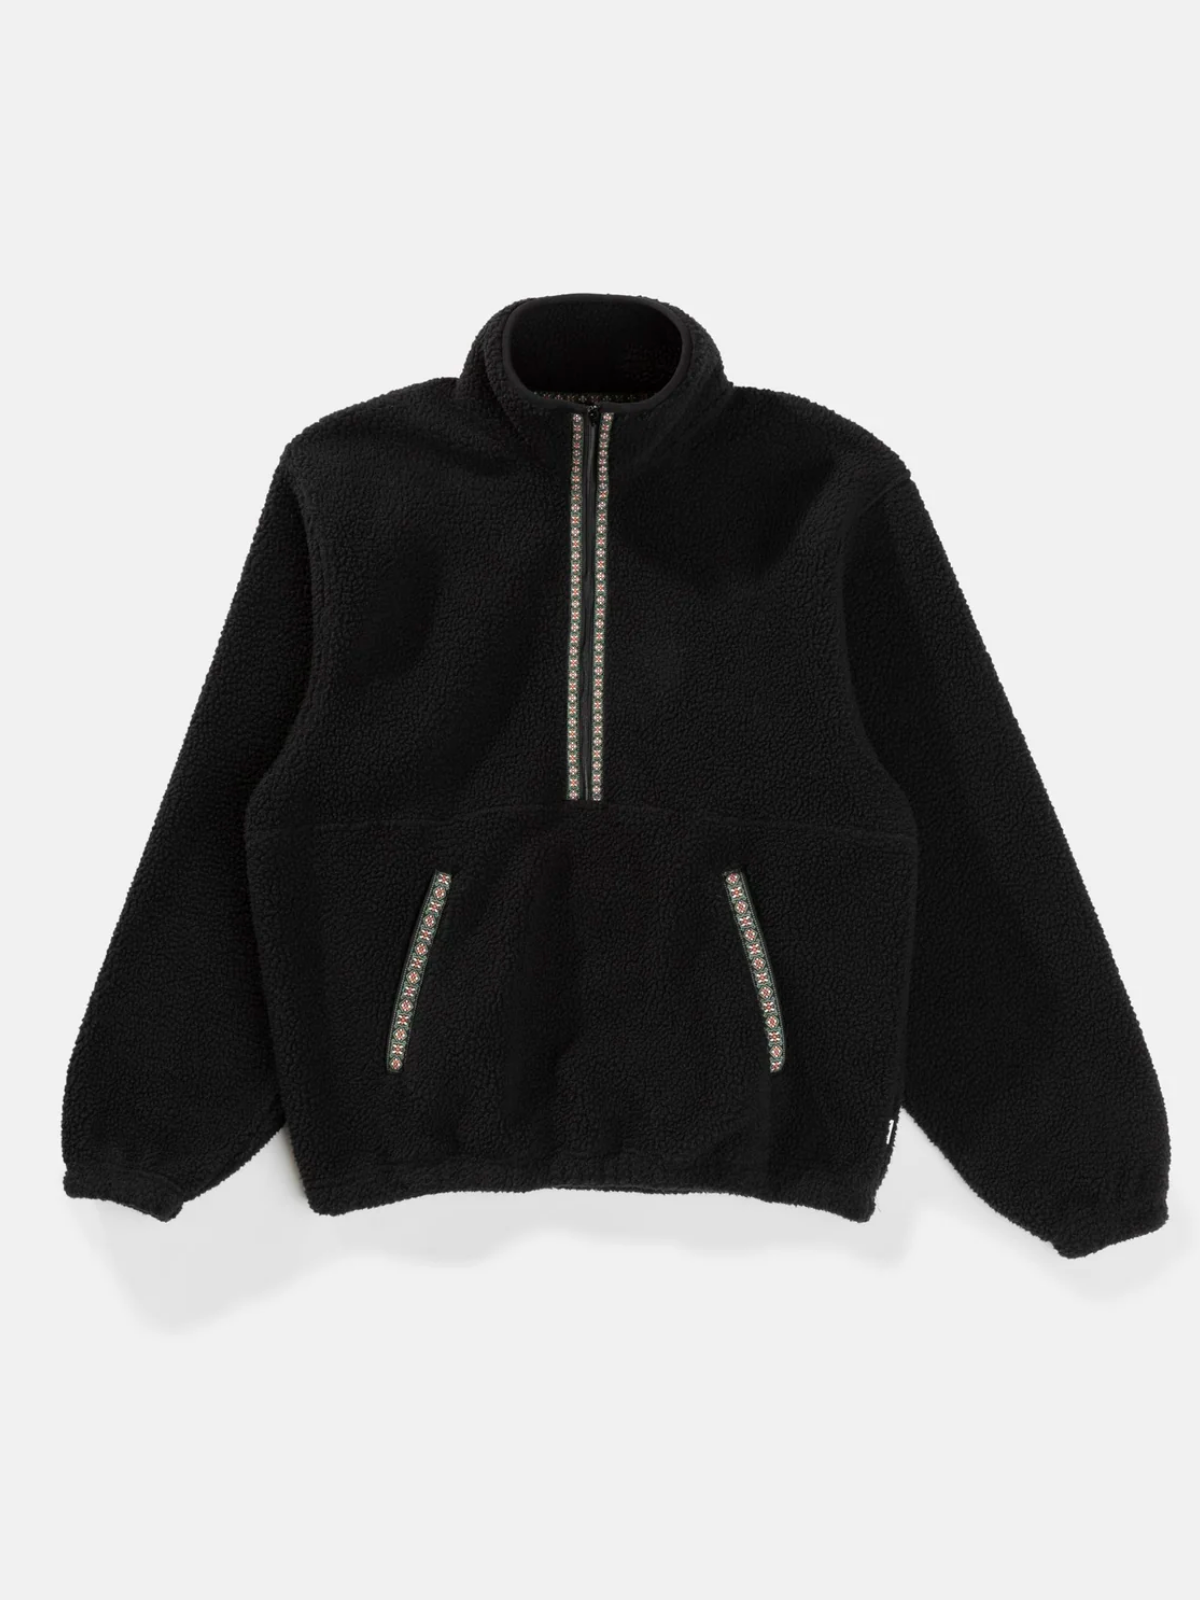 rhythm sherpa pullover halfzip black polyester fleece kangaroo pockets embroidered details kempt athens ga georgia men's clothing store